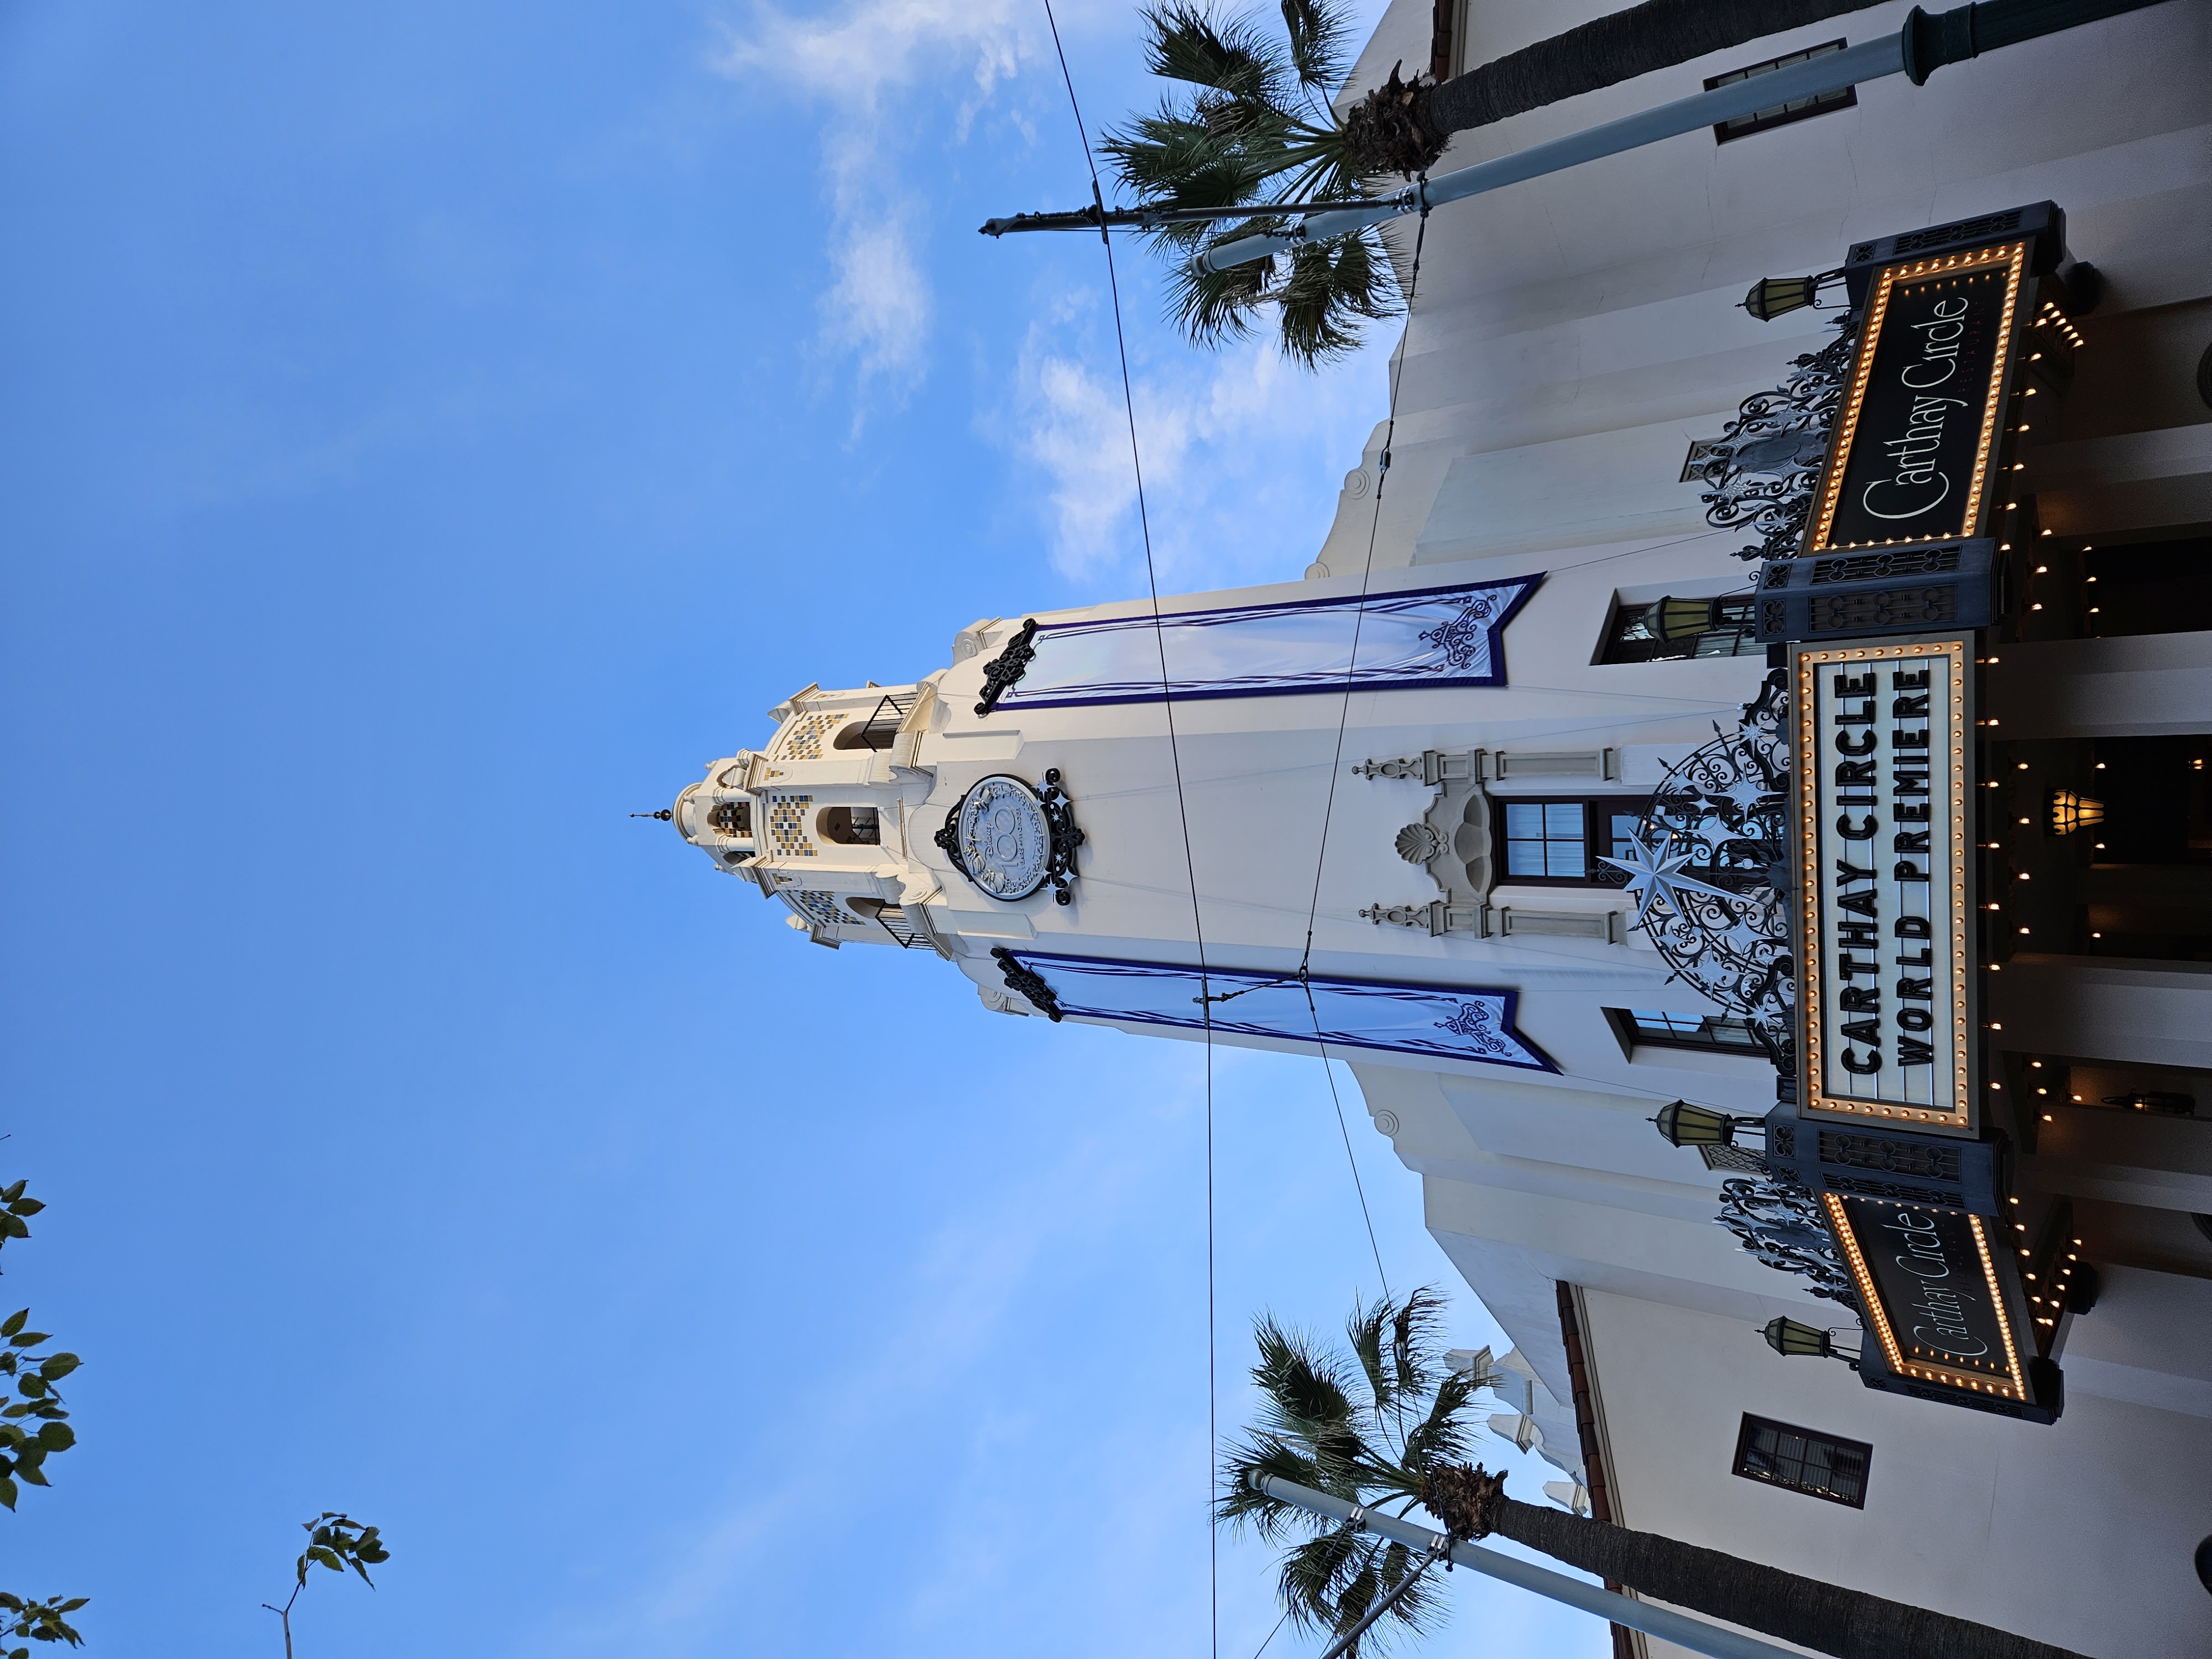 Photo of Carthay Circle at Disney California Adventure taken with Samsung Galaxy S23